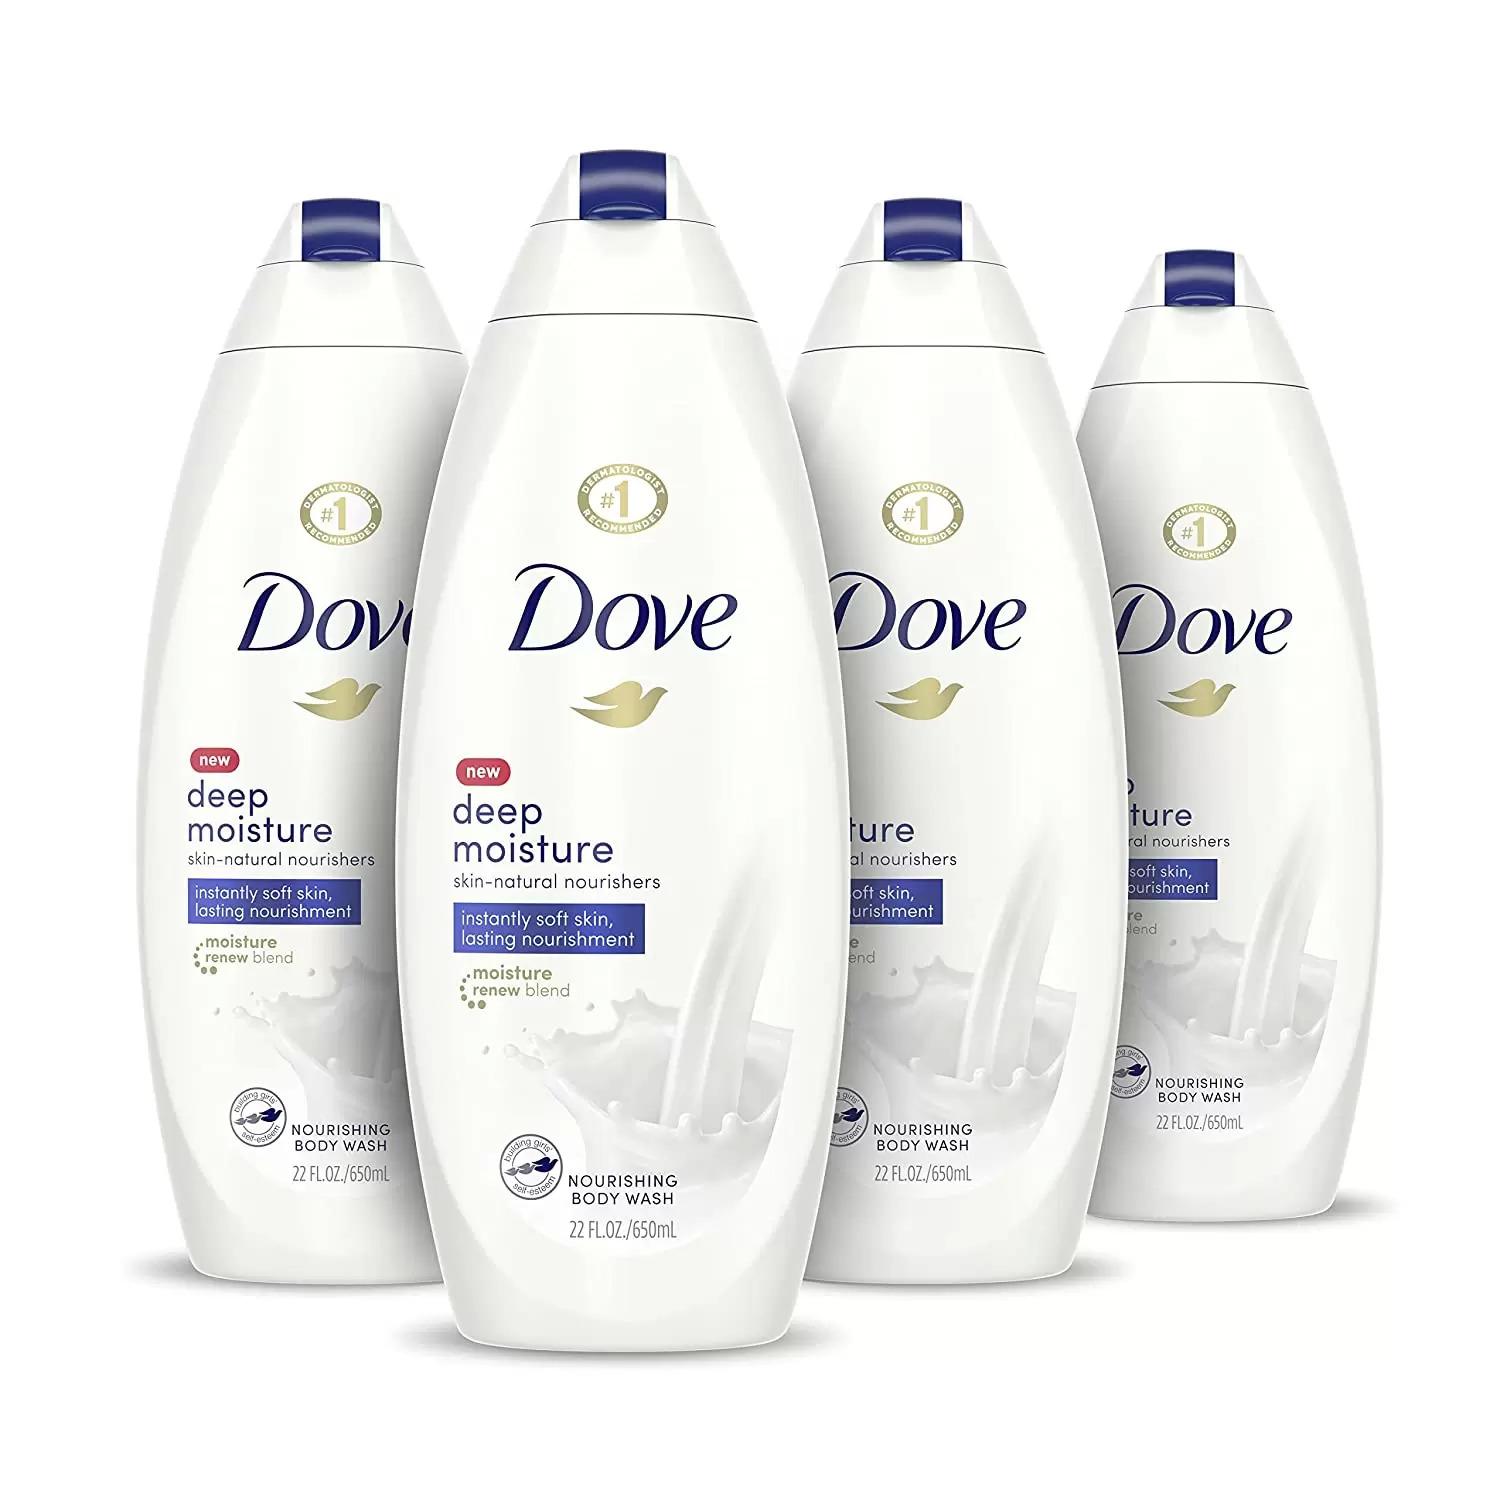 4 Dove Deep Moisture Body Wash for $13.67 Shipped